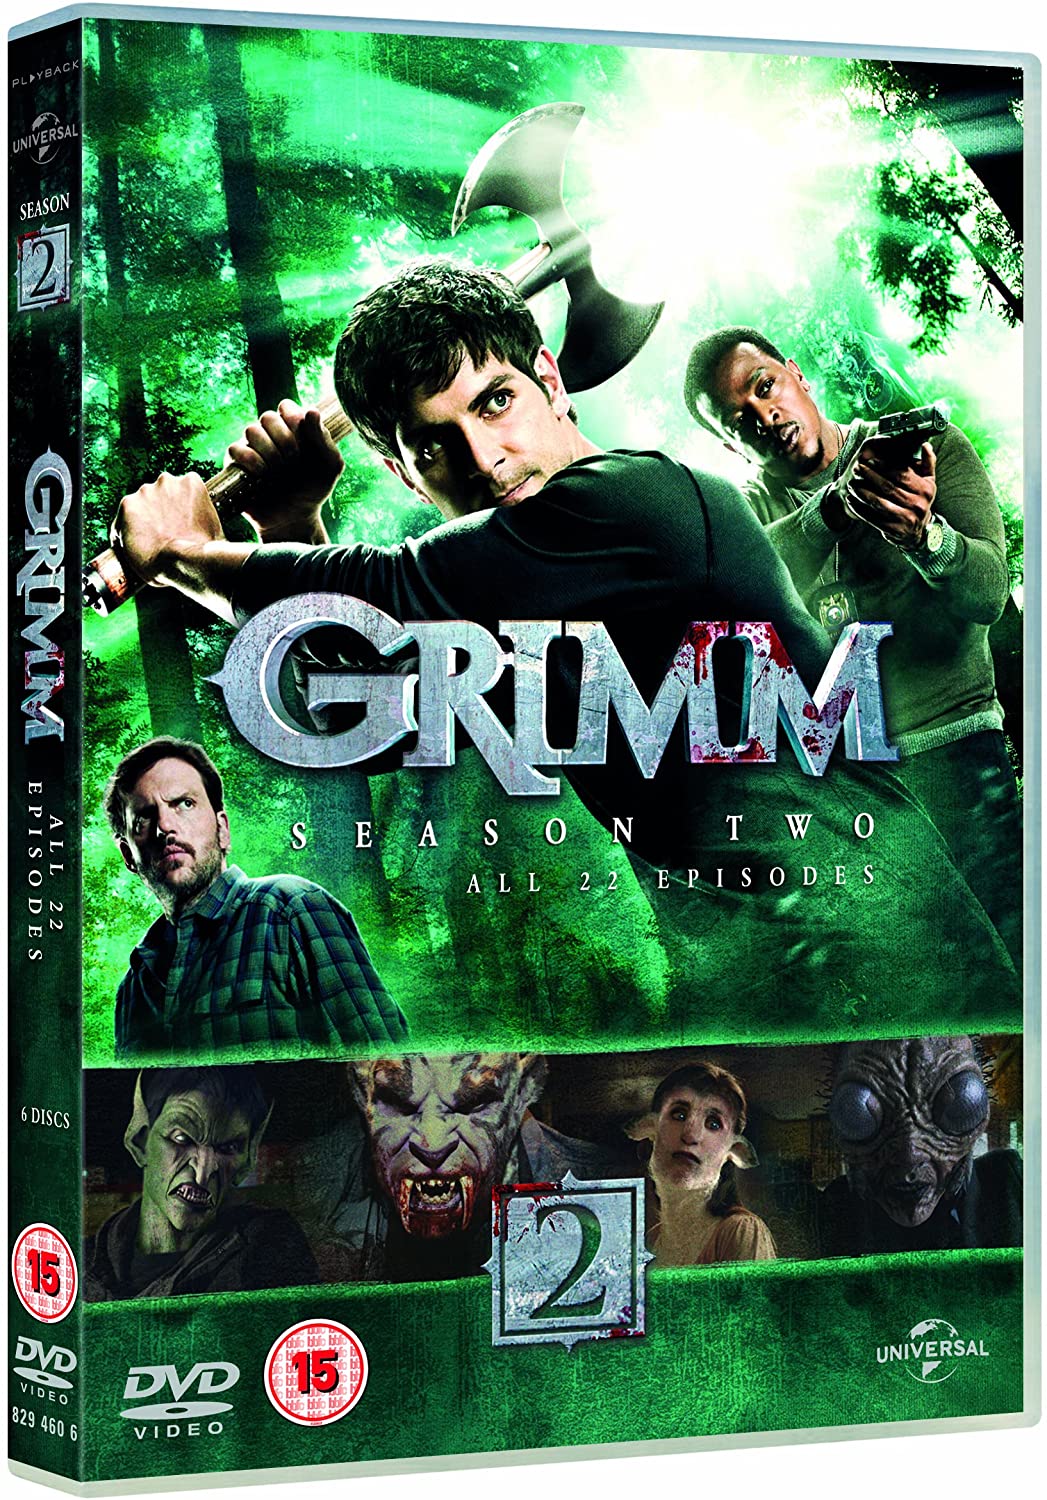 Grimm: Season 2 (DVD)